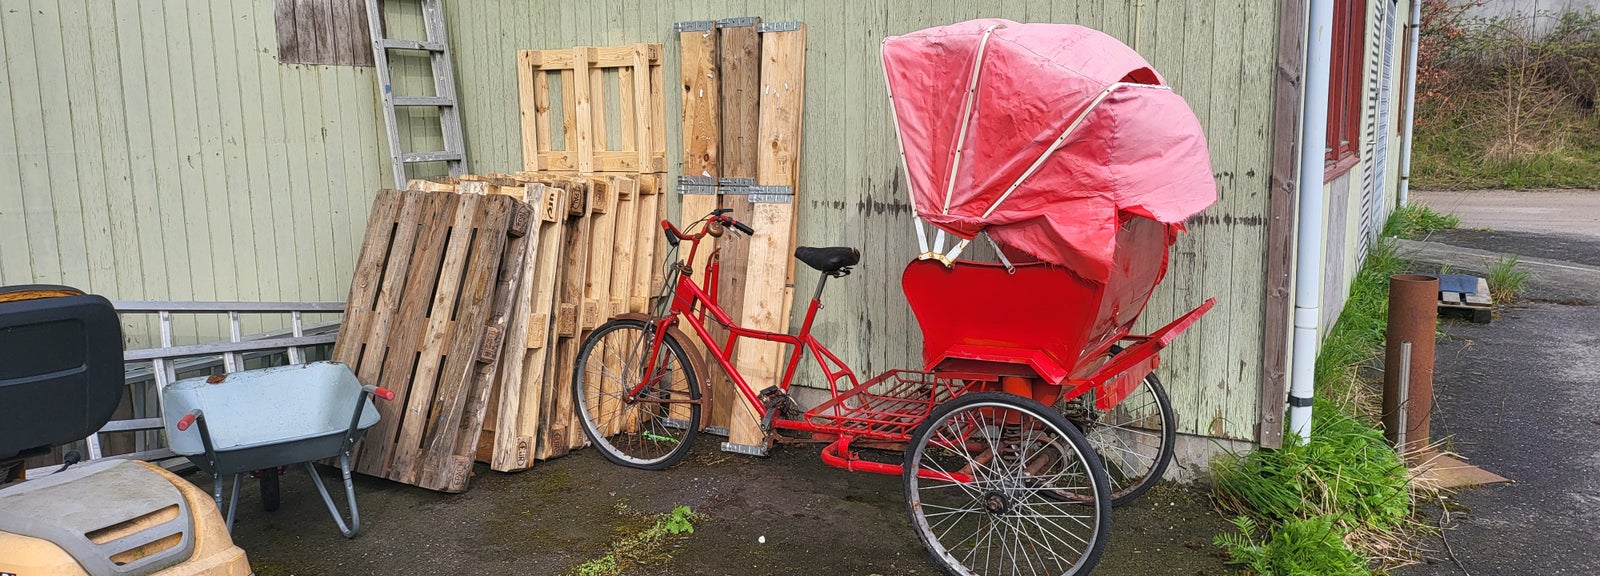 Rickshaw, Kular Cykle